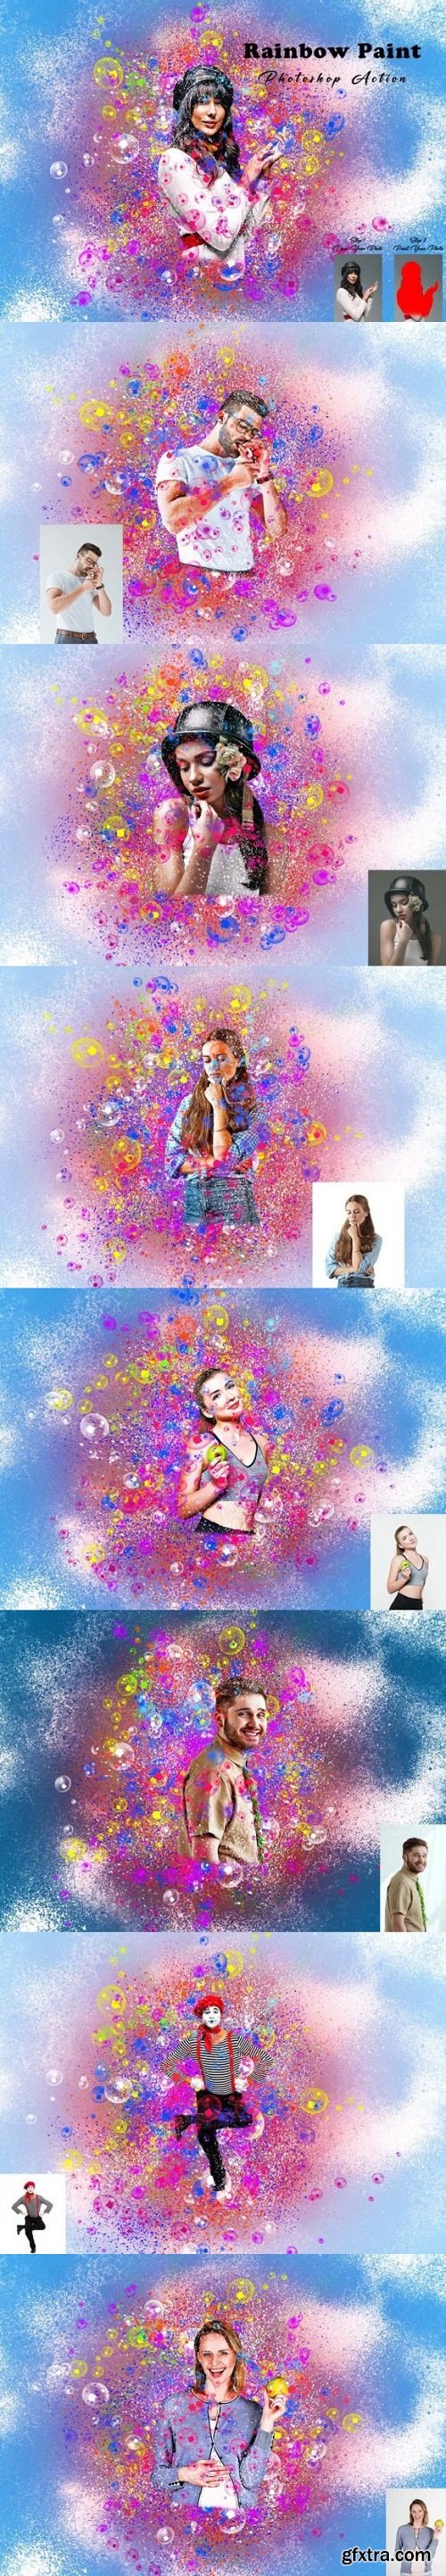 Rainbow Paint Photoshop Action